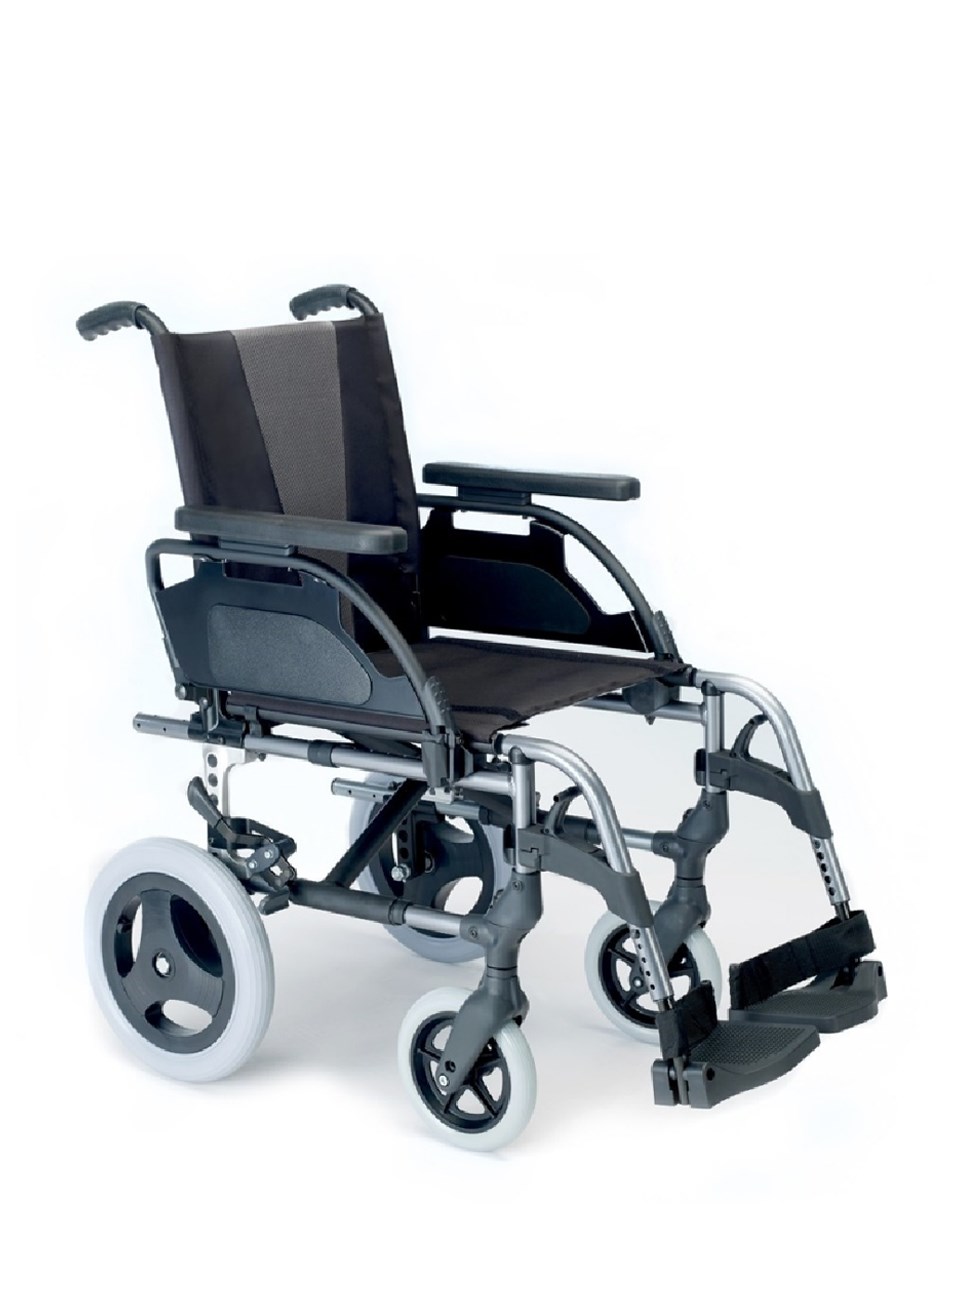 Авито кресло каталка. Кресло-коляска Breezy 710 Style p. Инвалидная коляска h007. Кресло каталка Армед 2500. Кресло коляска ly 710 производитель.